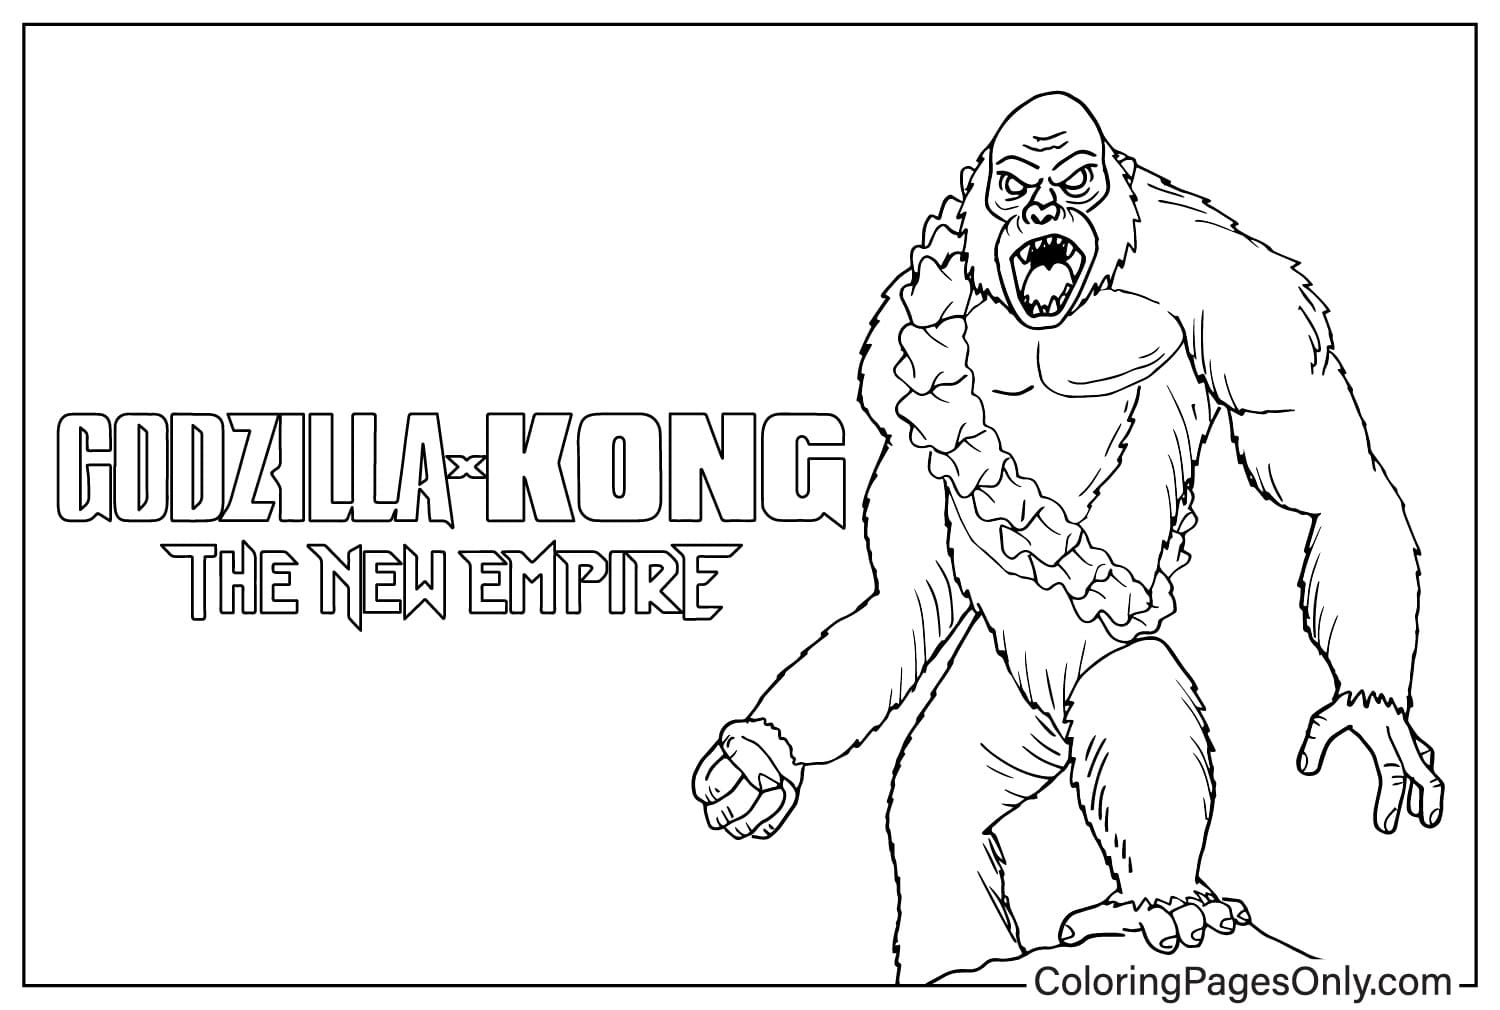 Godzilla x Kong - Le nouvel empire de Godzilla x Kong : Le nouvel empire